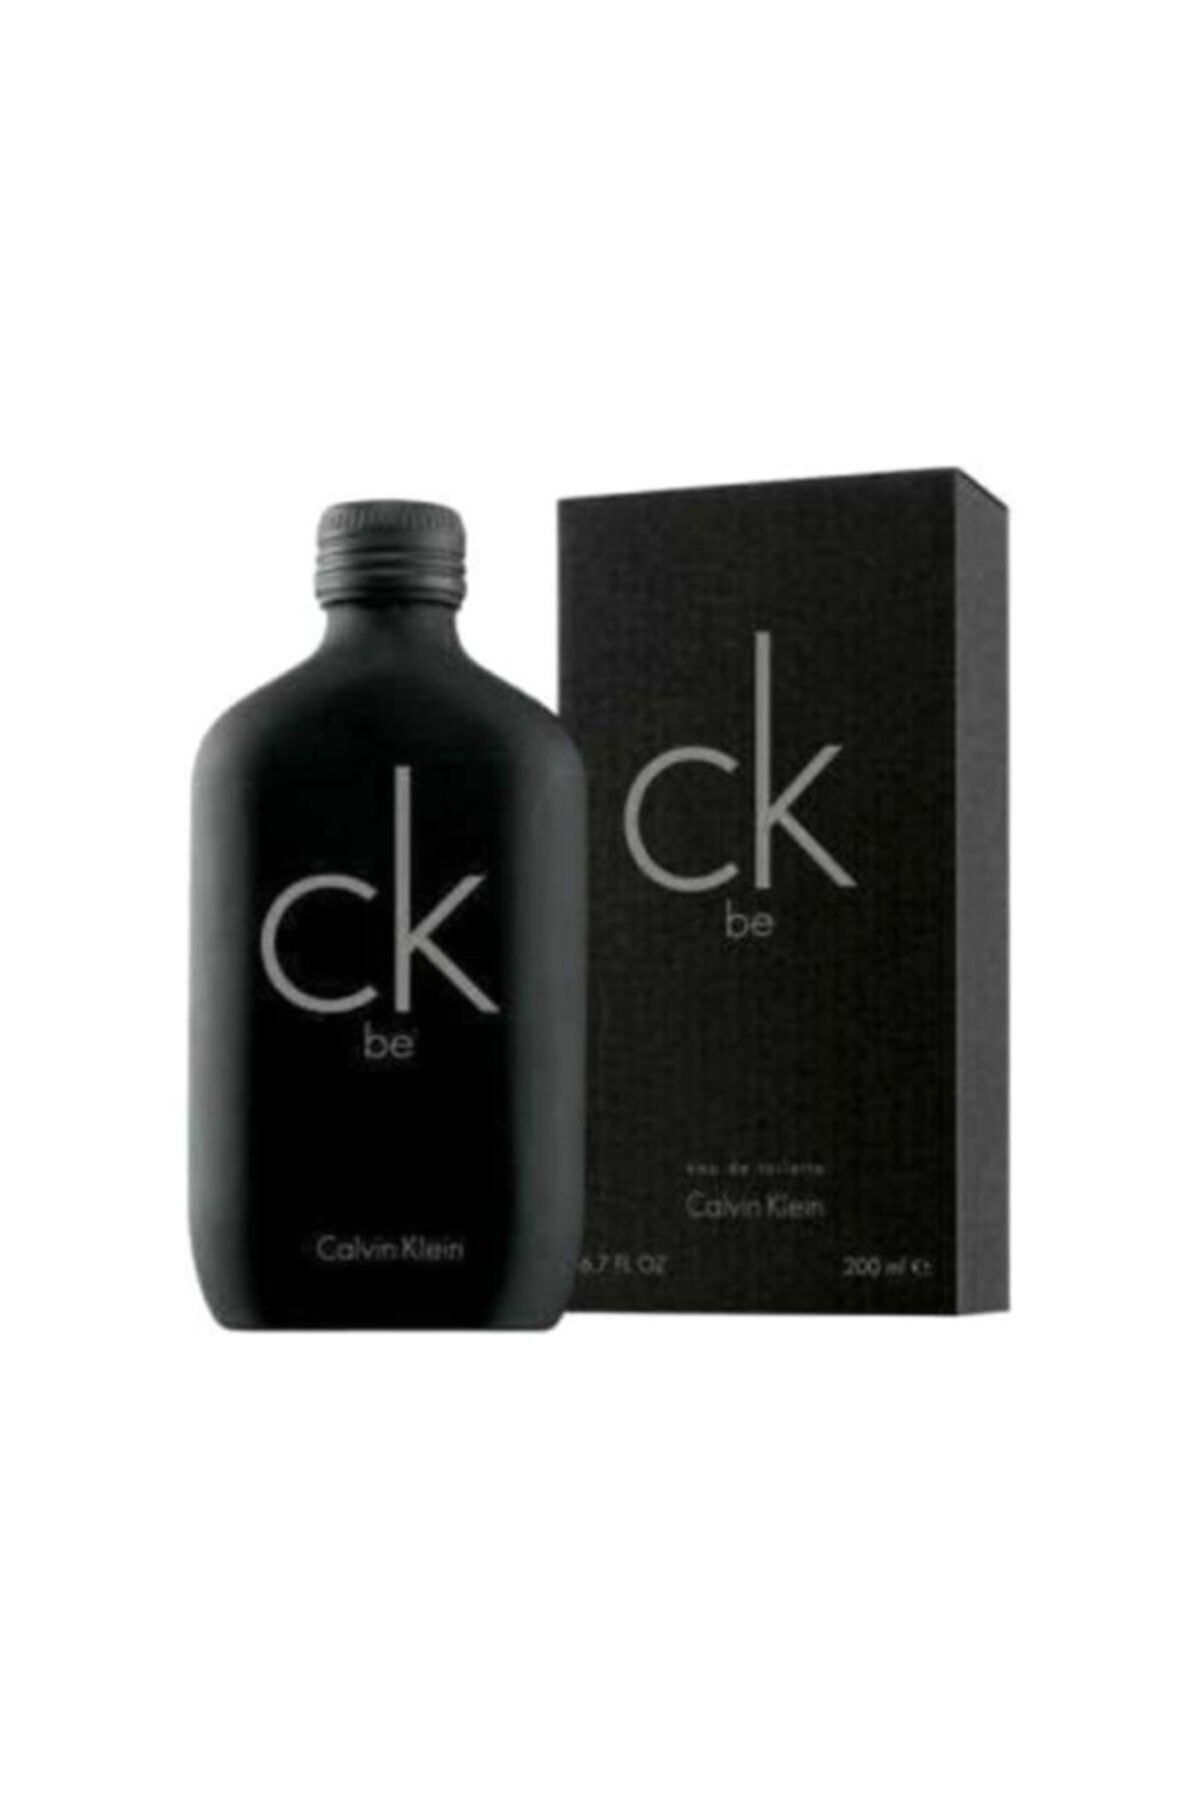 Calvin Klein عطر مردانه Be ادوتویلت 200 ml